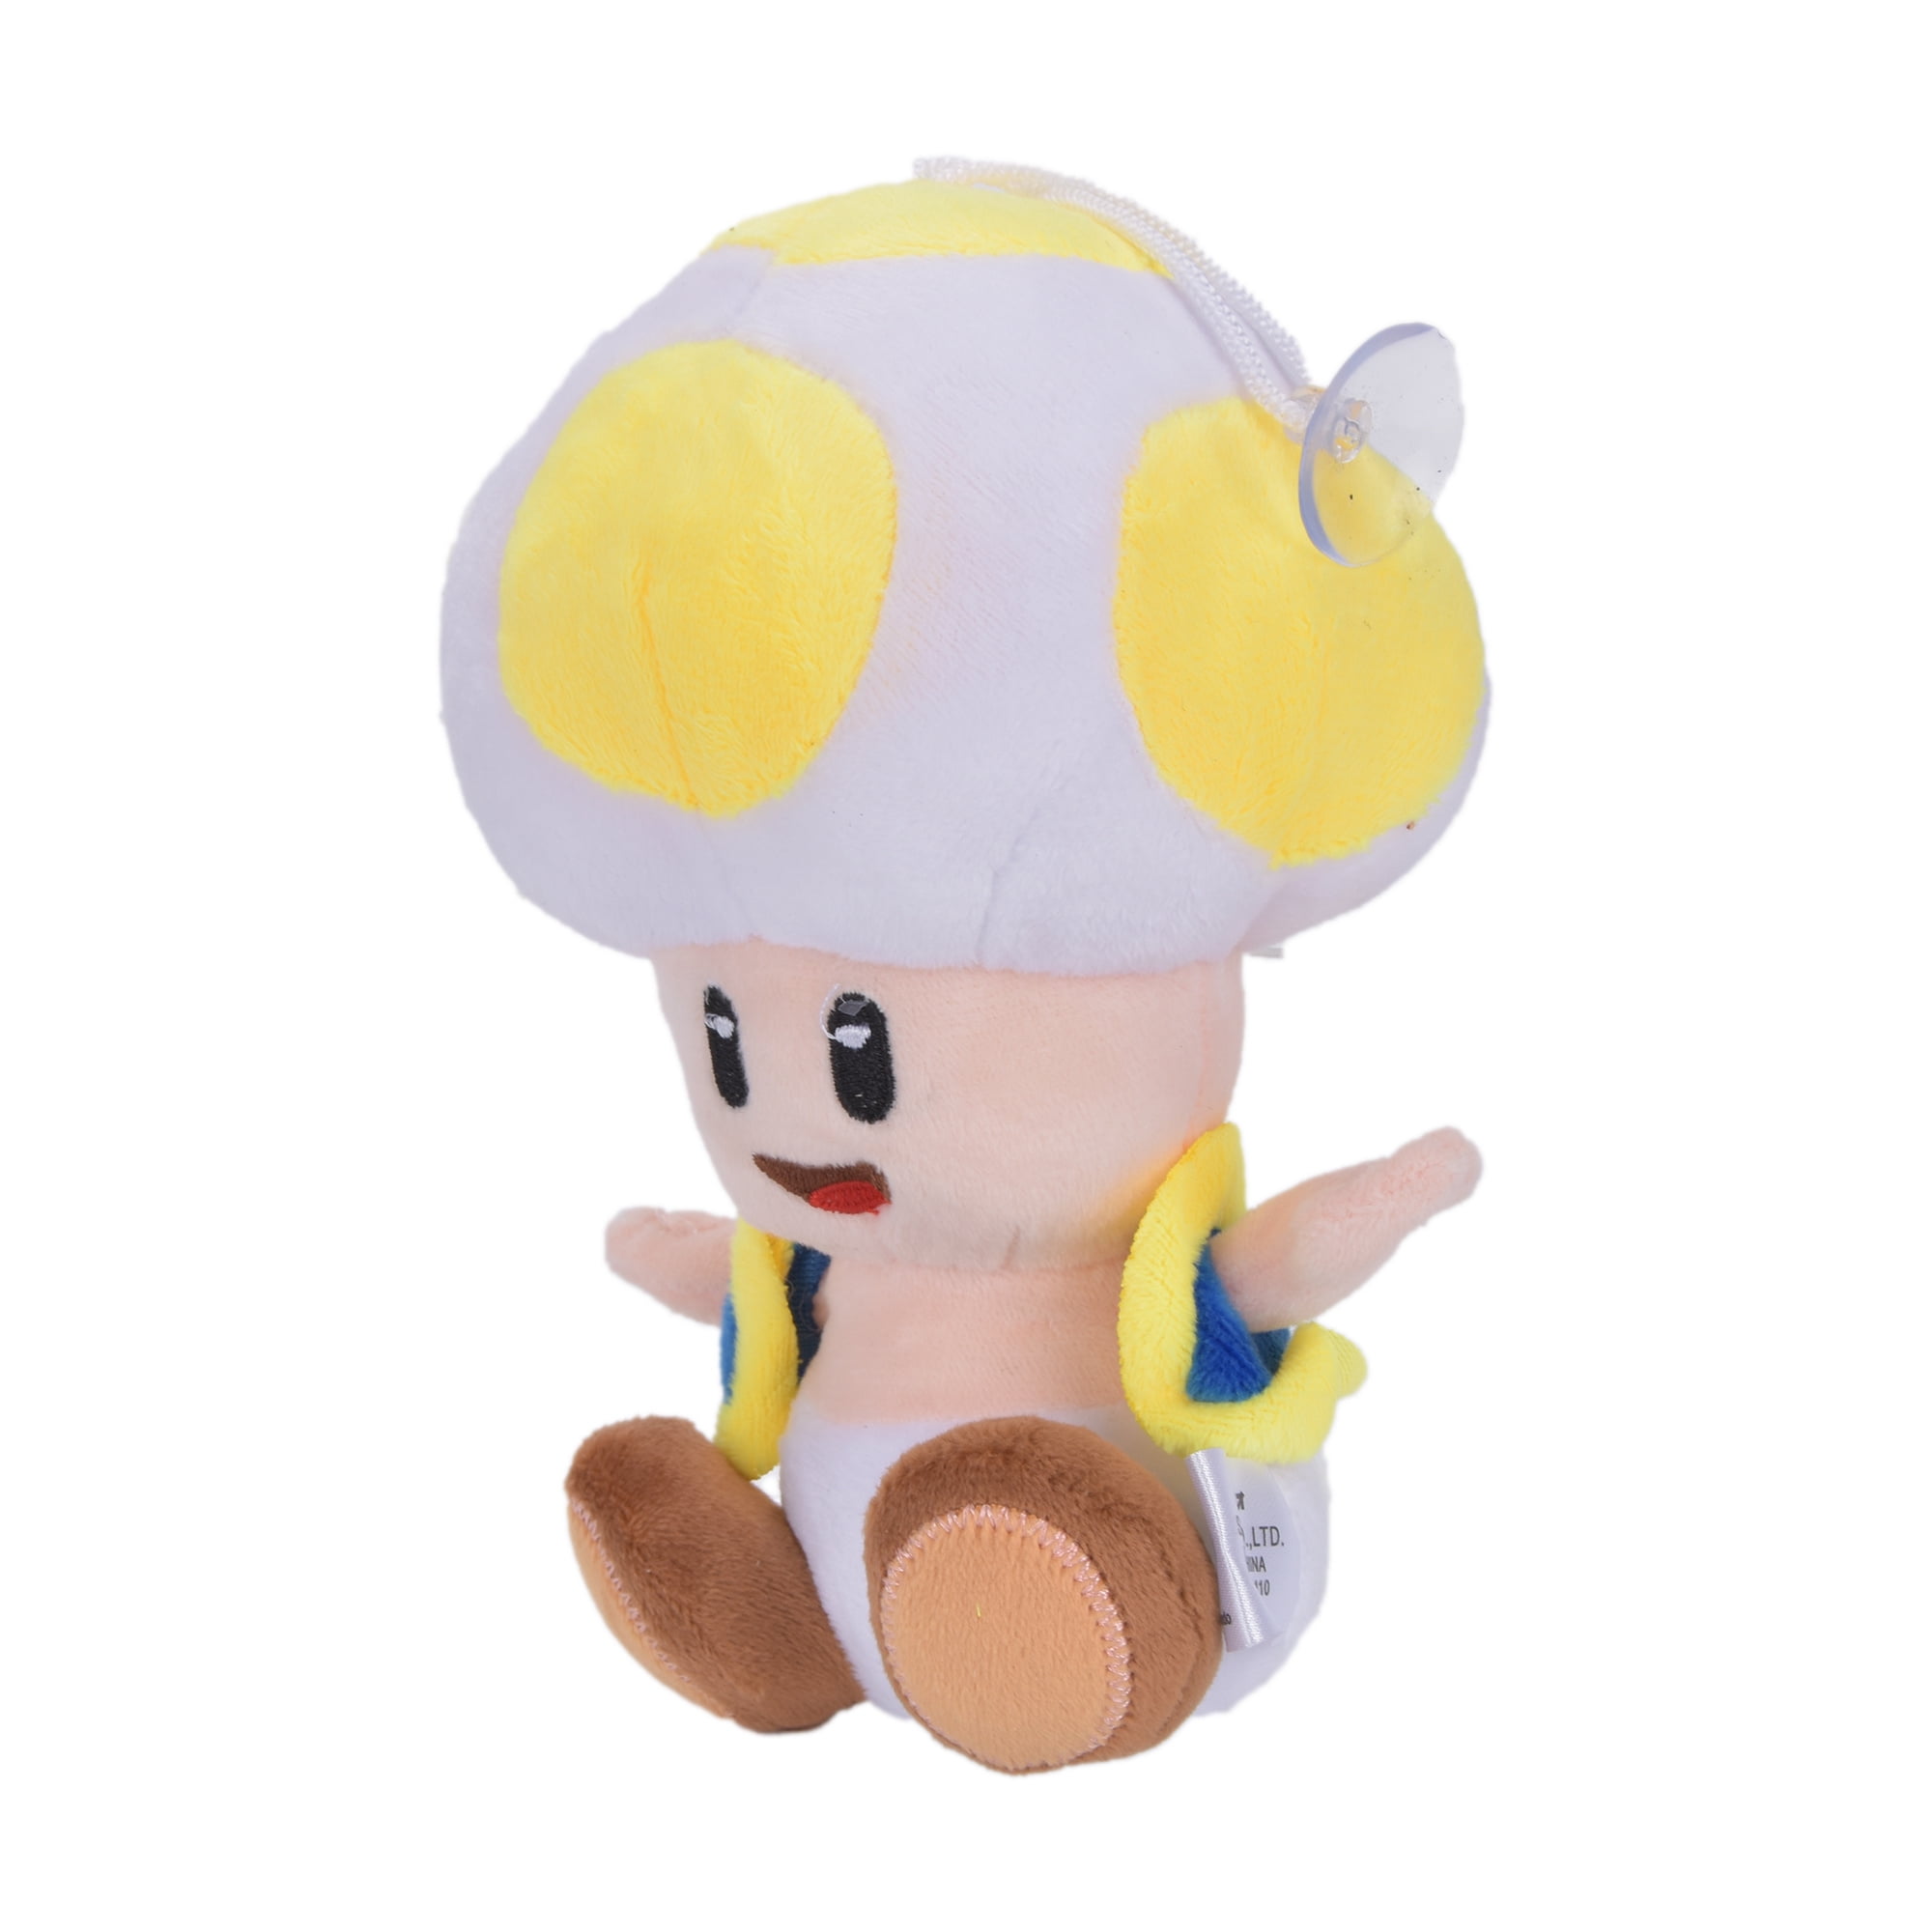 Details about   Lemmy Koopa Super Mario Bros Plush Toy Hip Koopalings Stuffed Animal Kids 5.5“ 